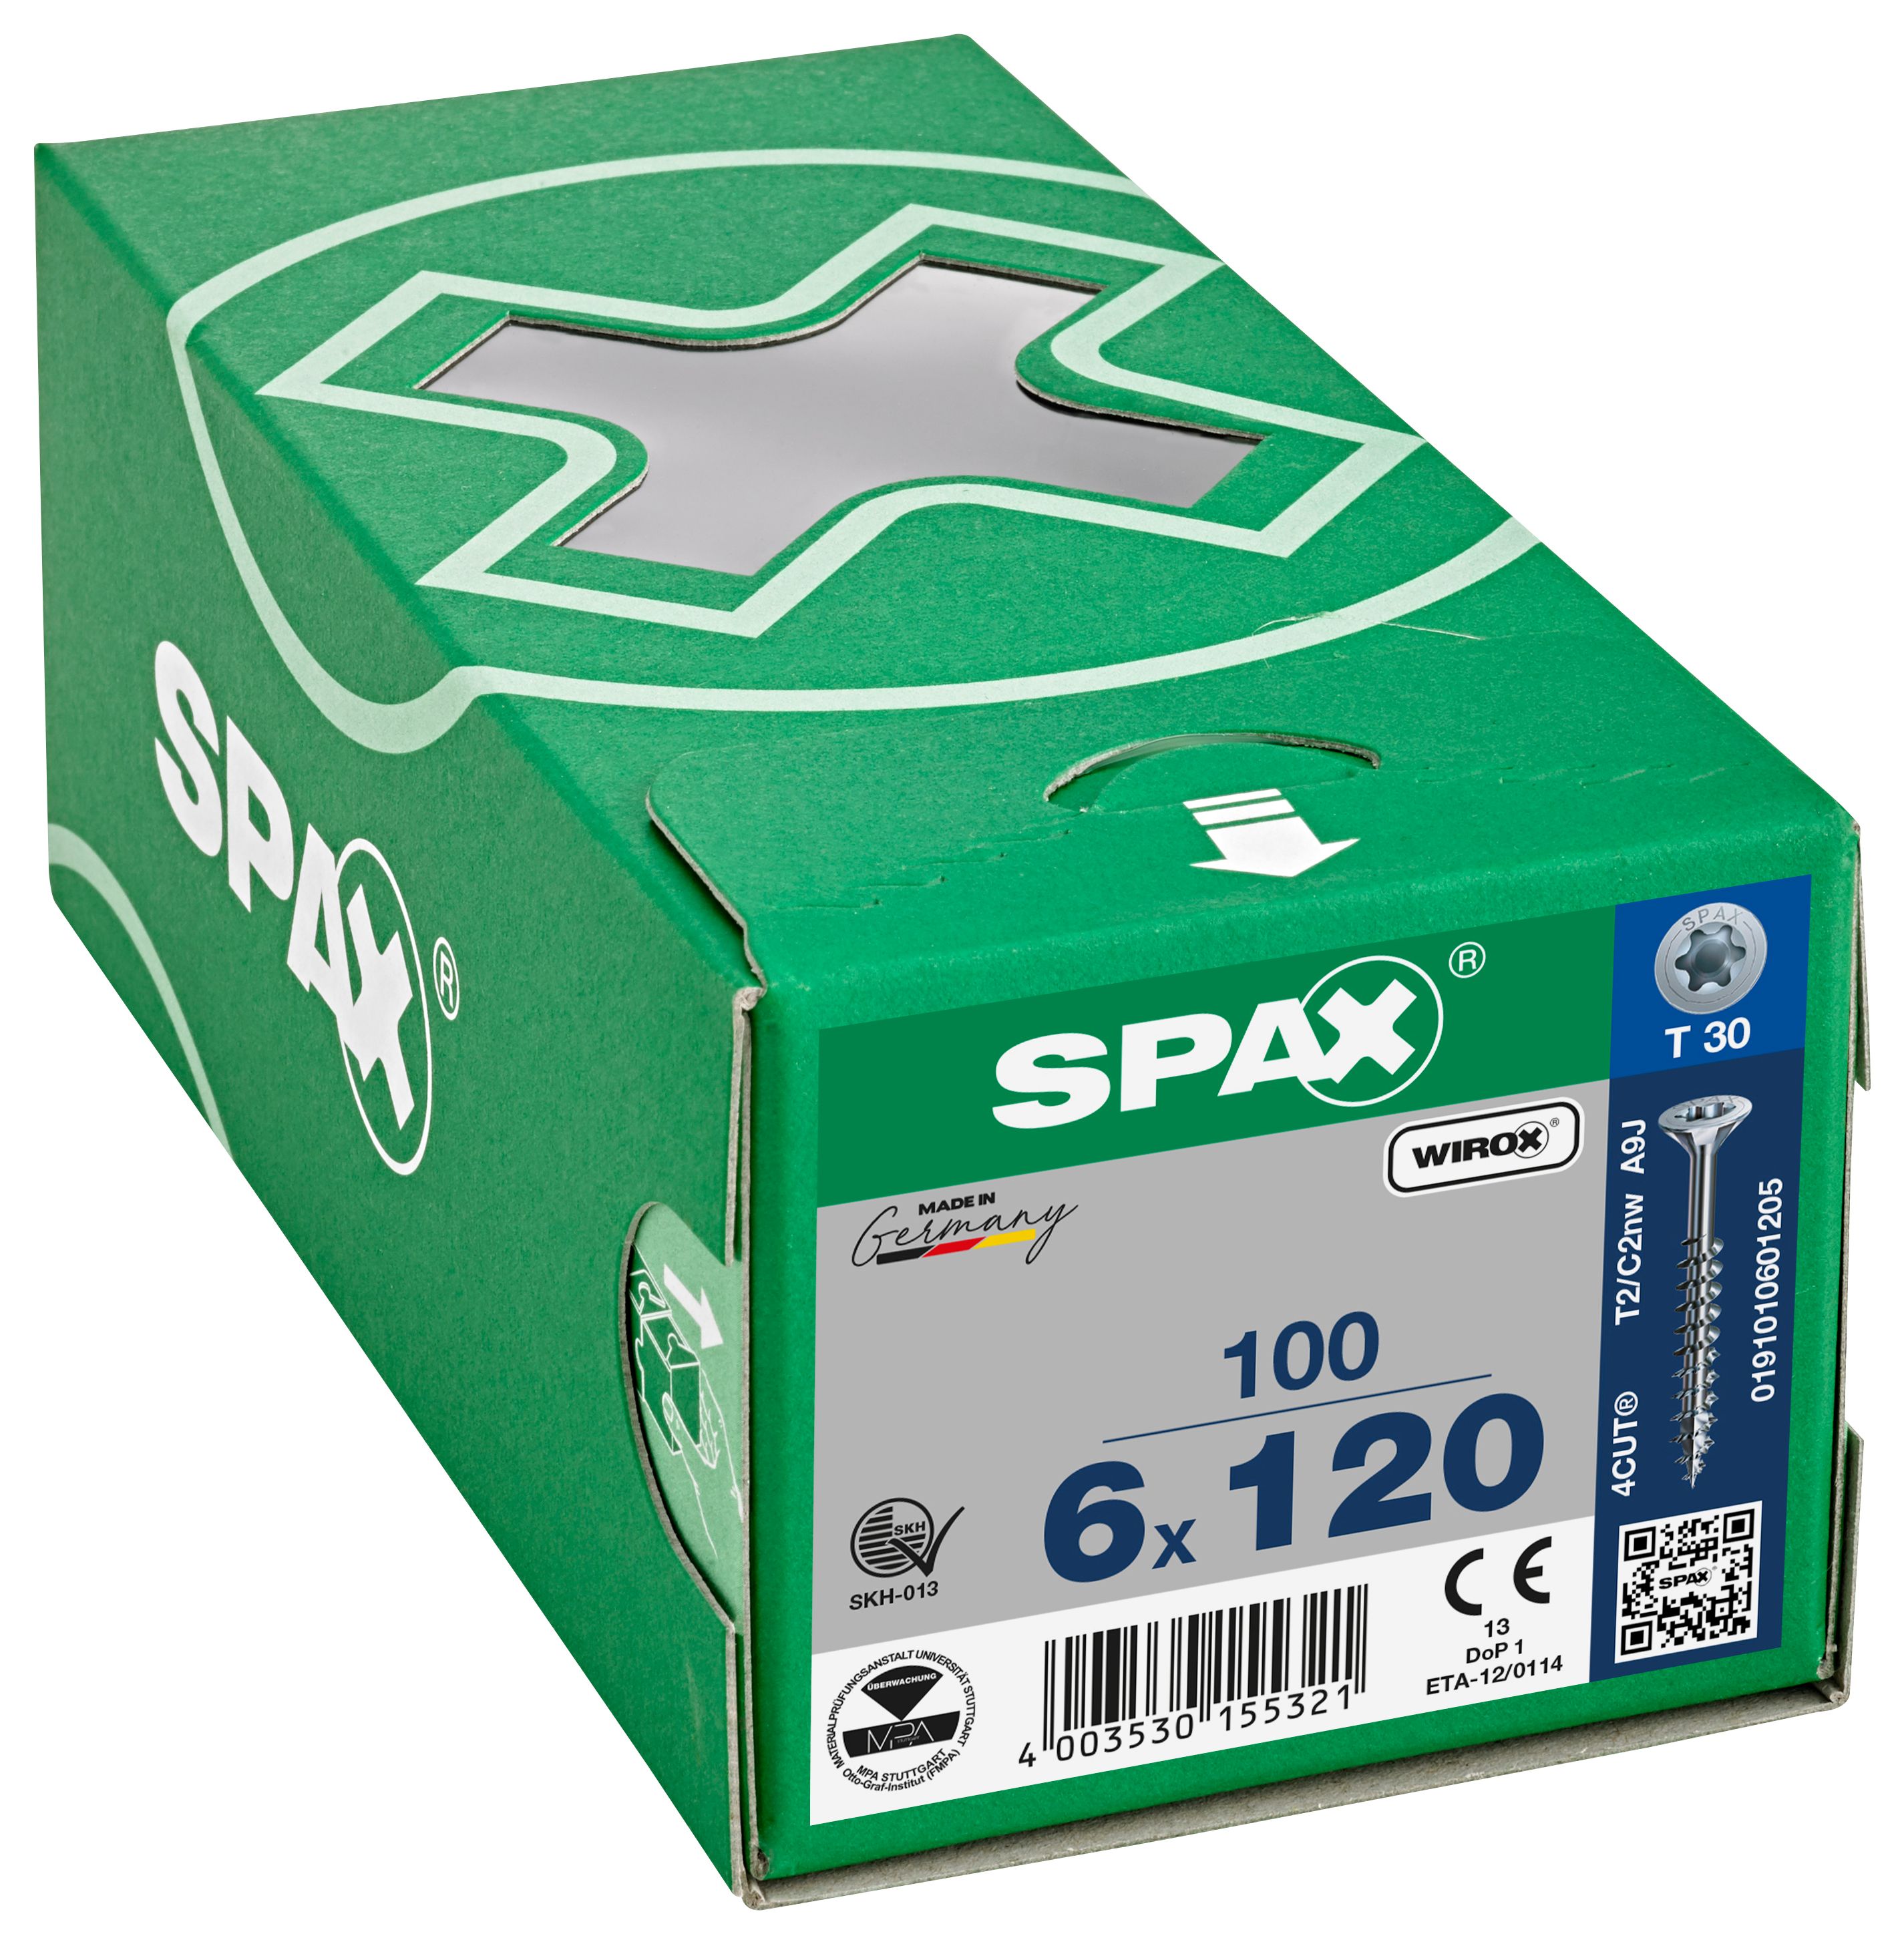 Spax Tx Countersunk Wirox Screws - 6x120mm Pack Of 100